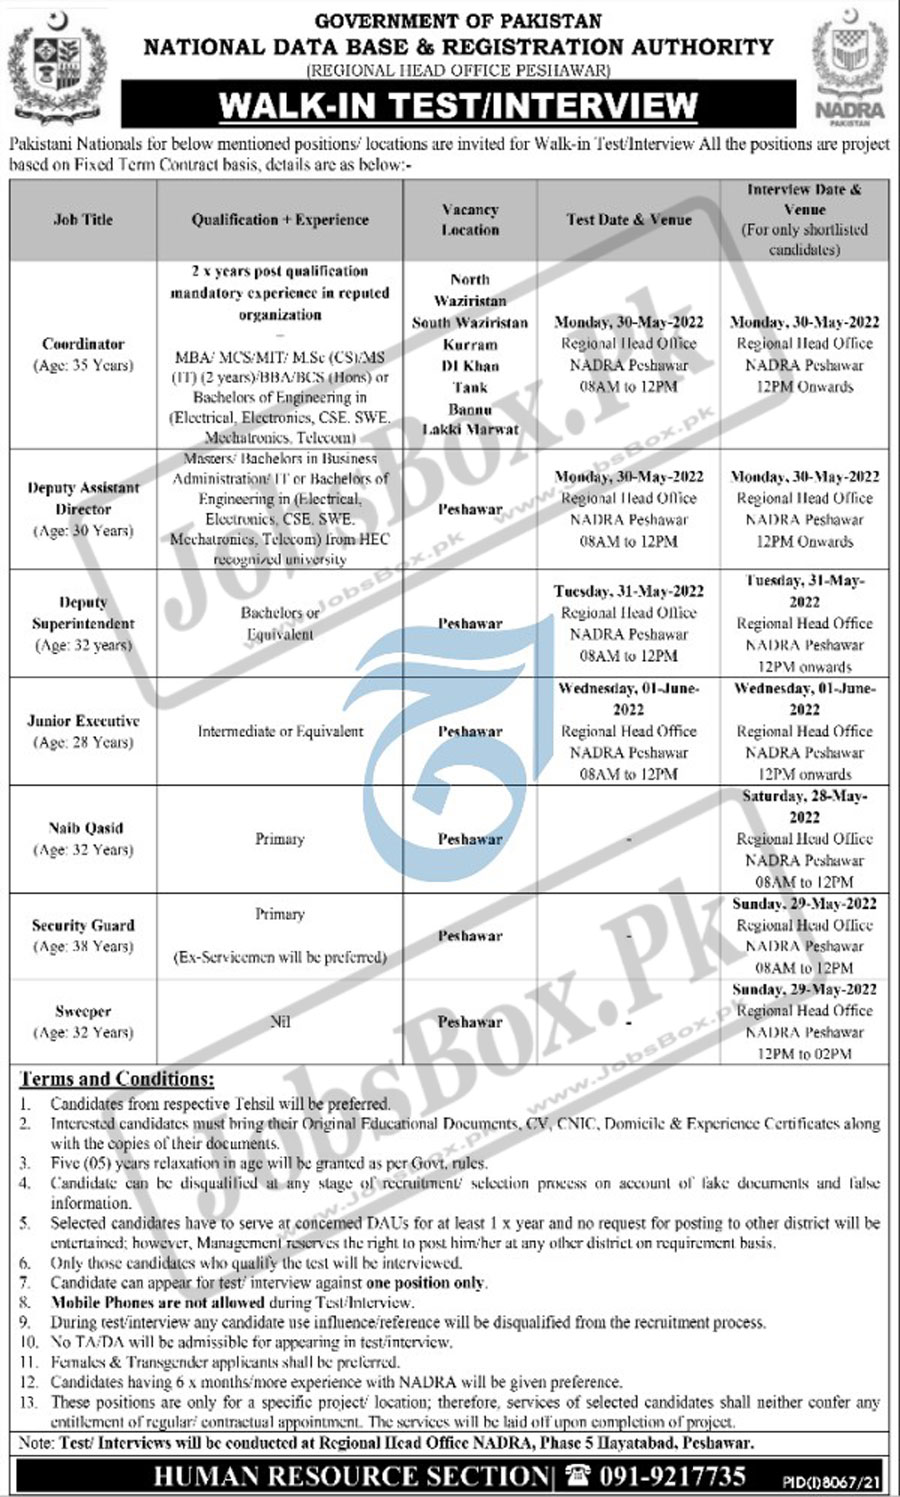 NADRA Jobs 2022 Ministry of Interior – Fill Form at www.nadra.gov.pk